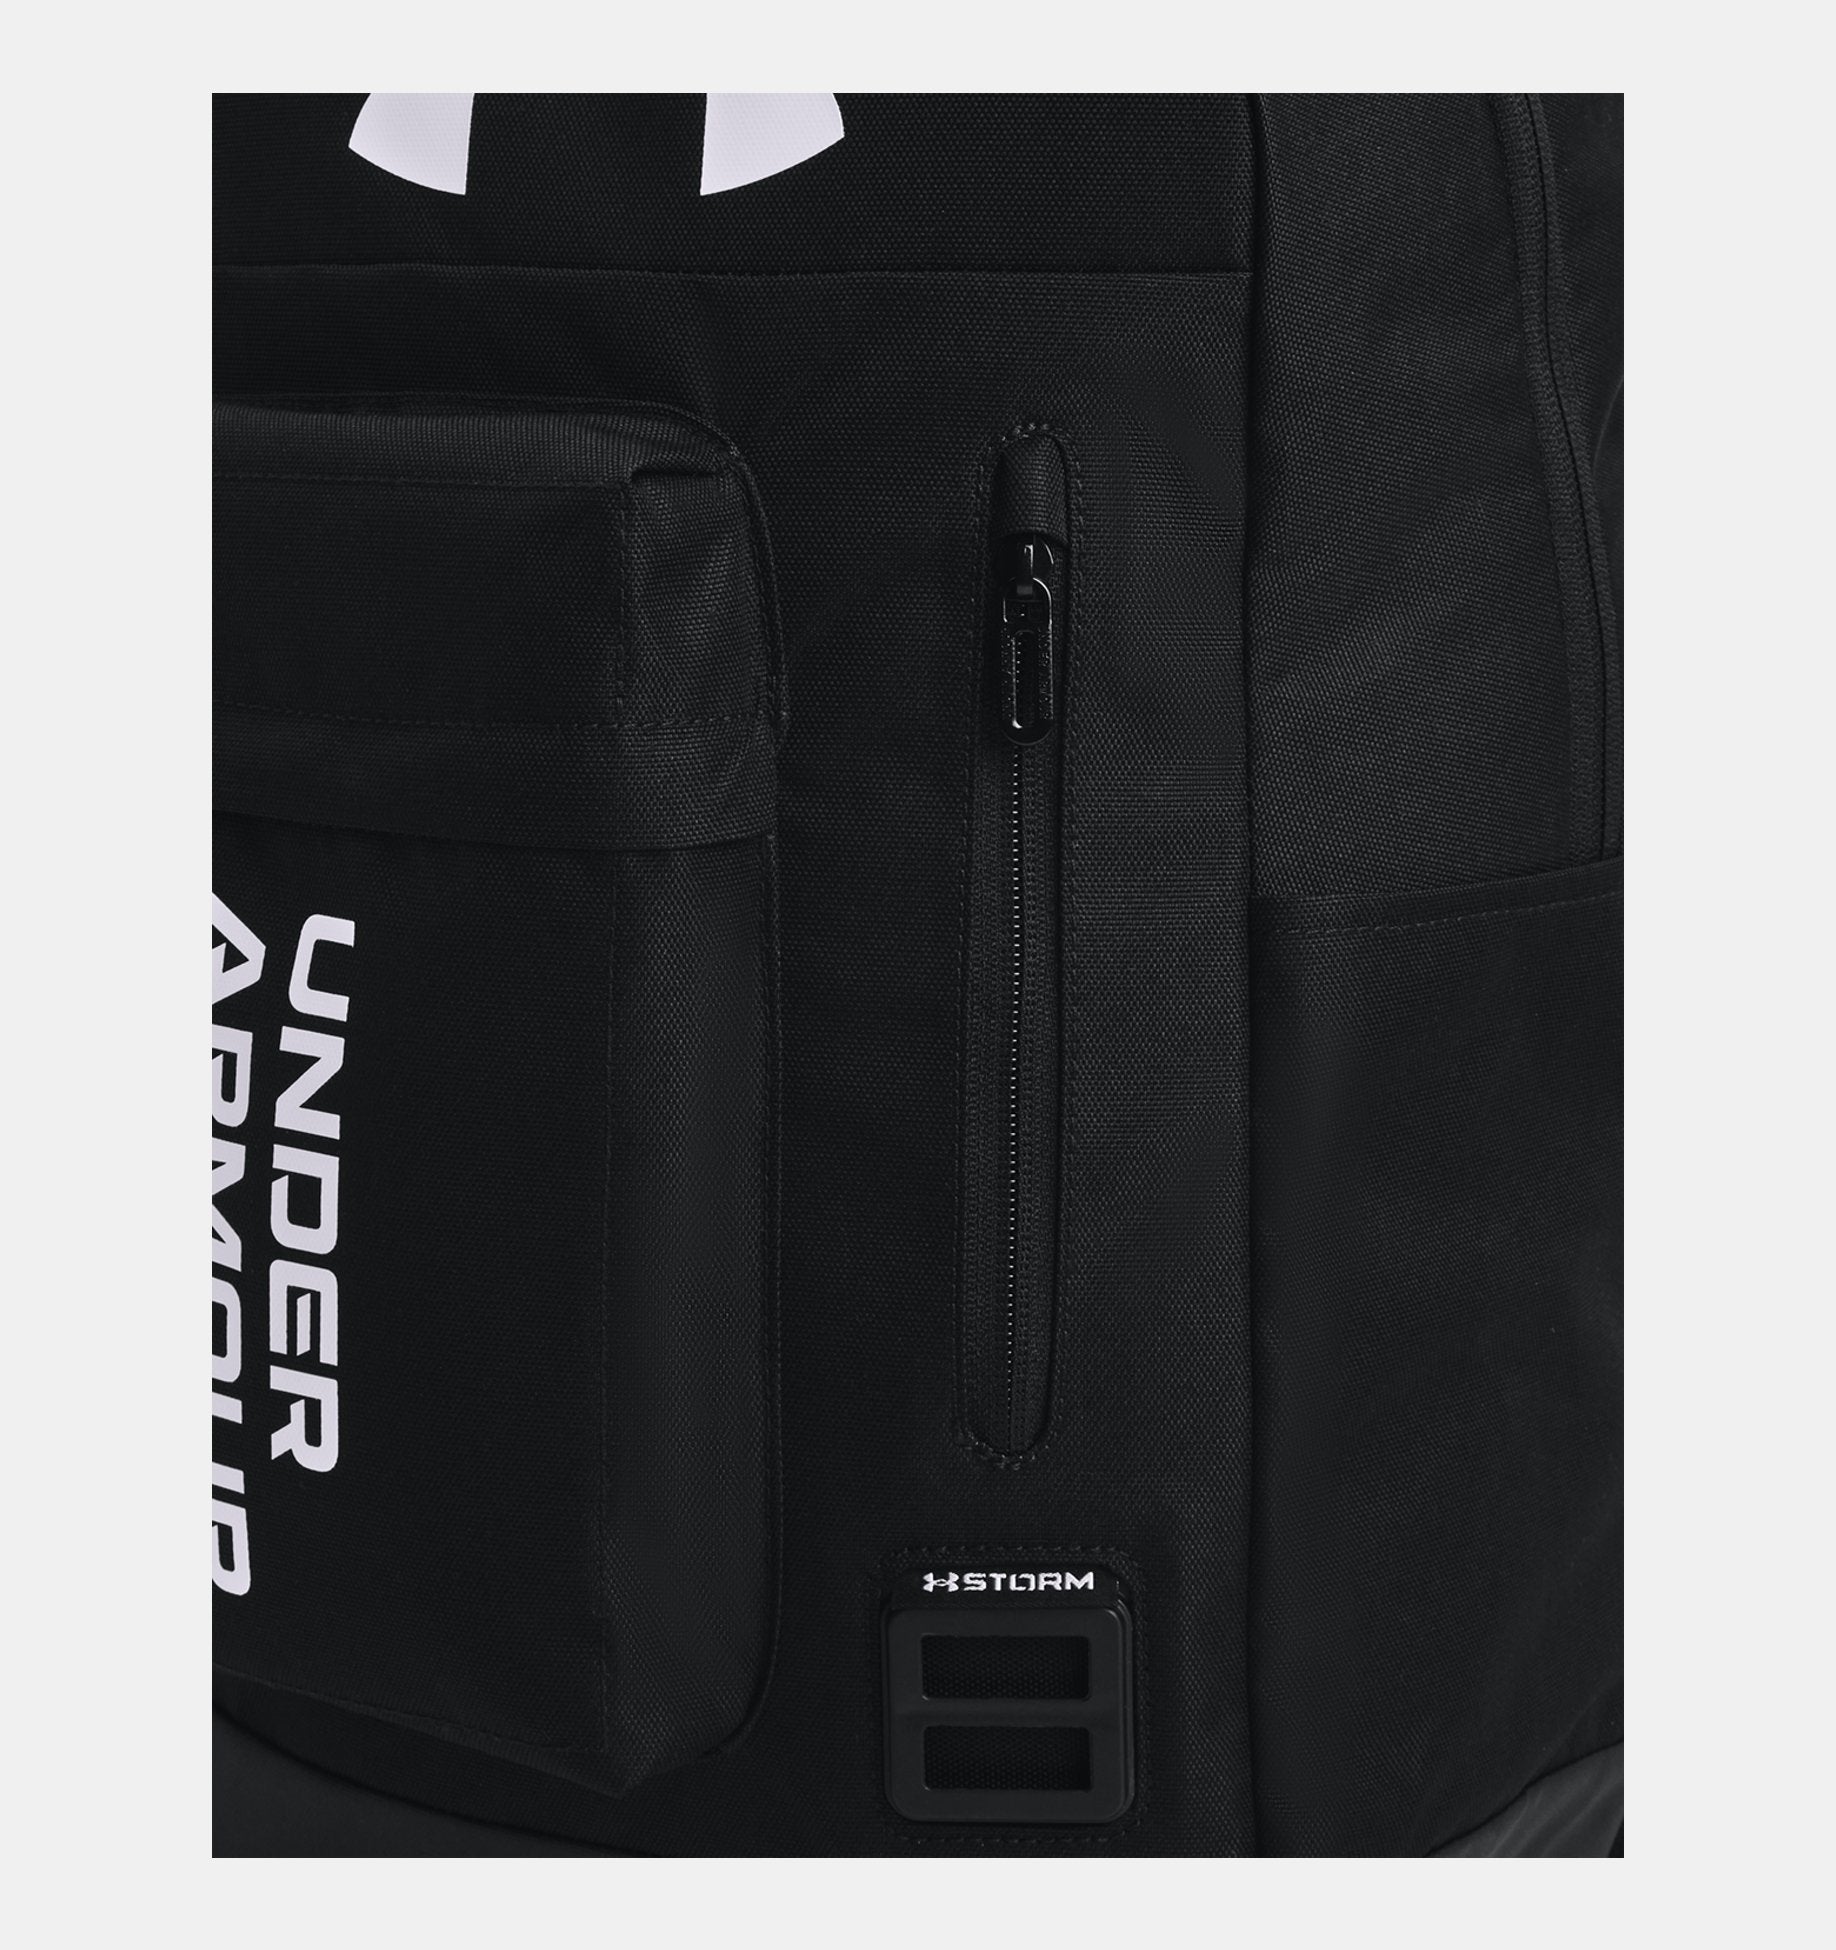 UAE-Z2 (Under armour unisex halftime backpack black/white) 22493478